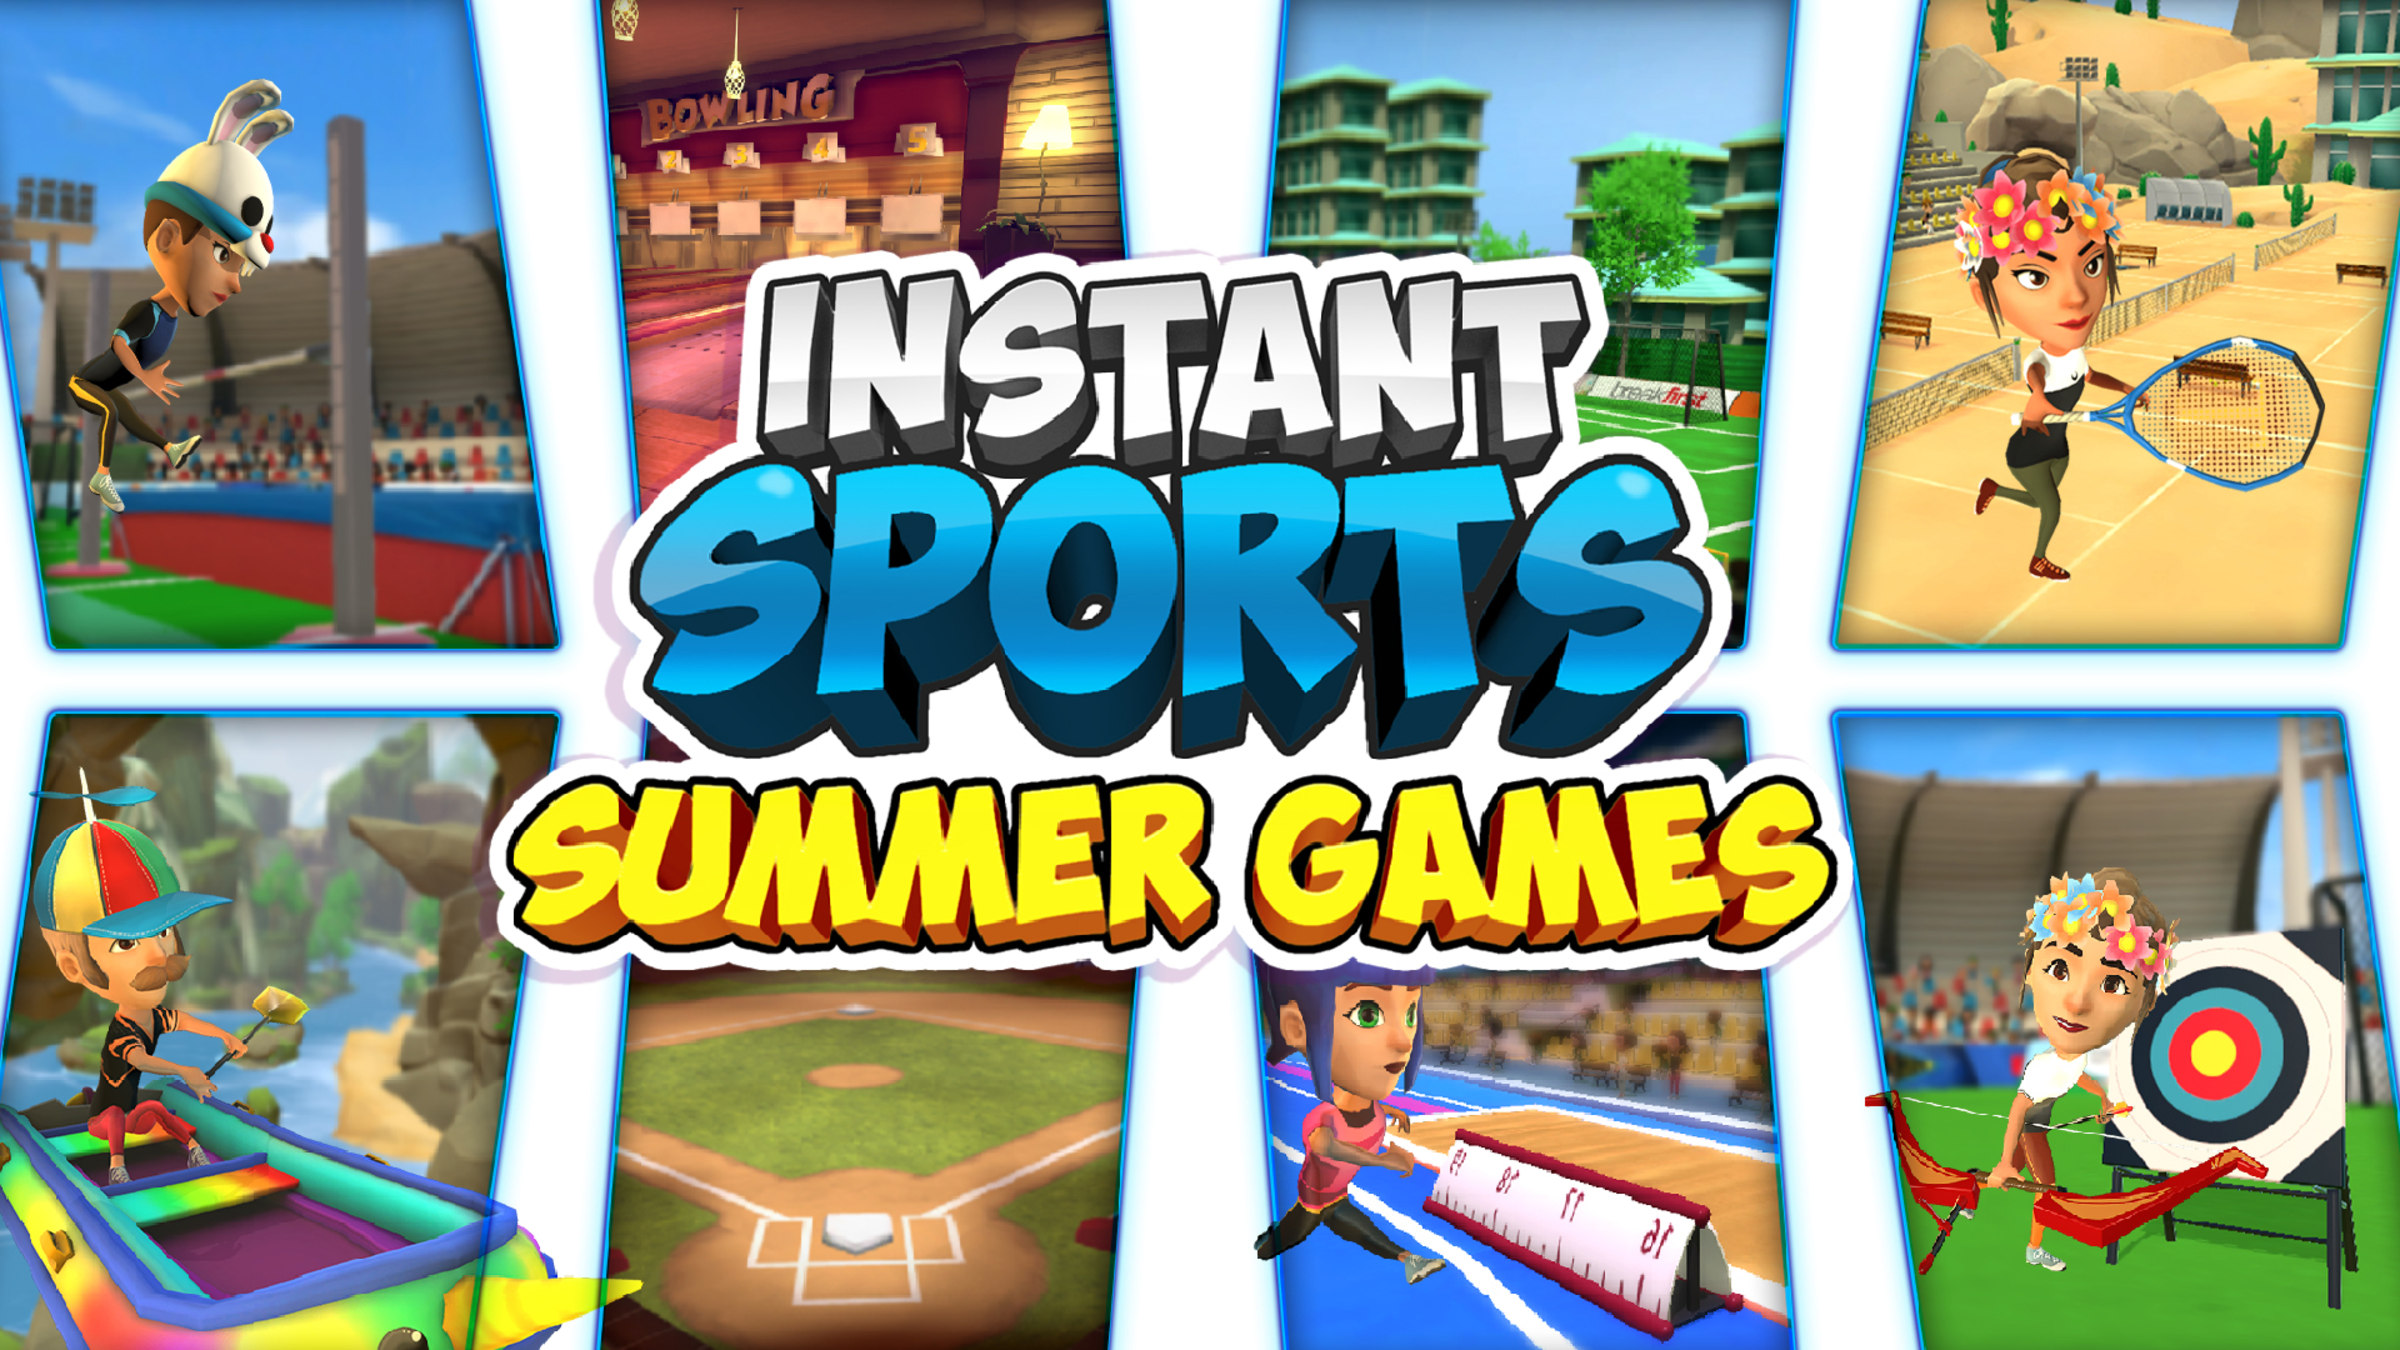 eksistens guide radioaktivitet Instant Sports Summer Games for Nintendo Switch - Nintendo Official Site